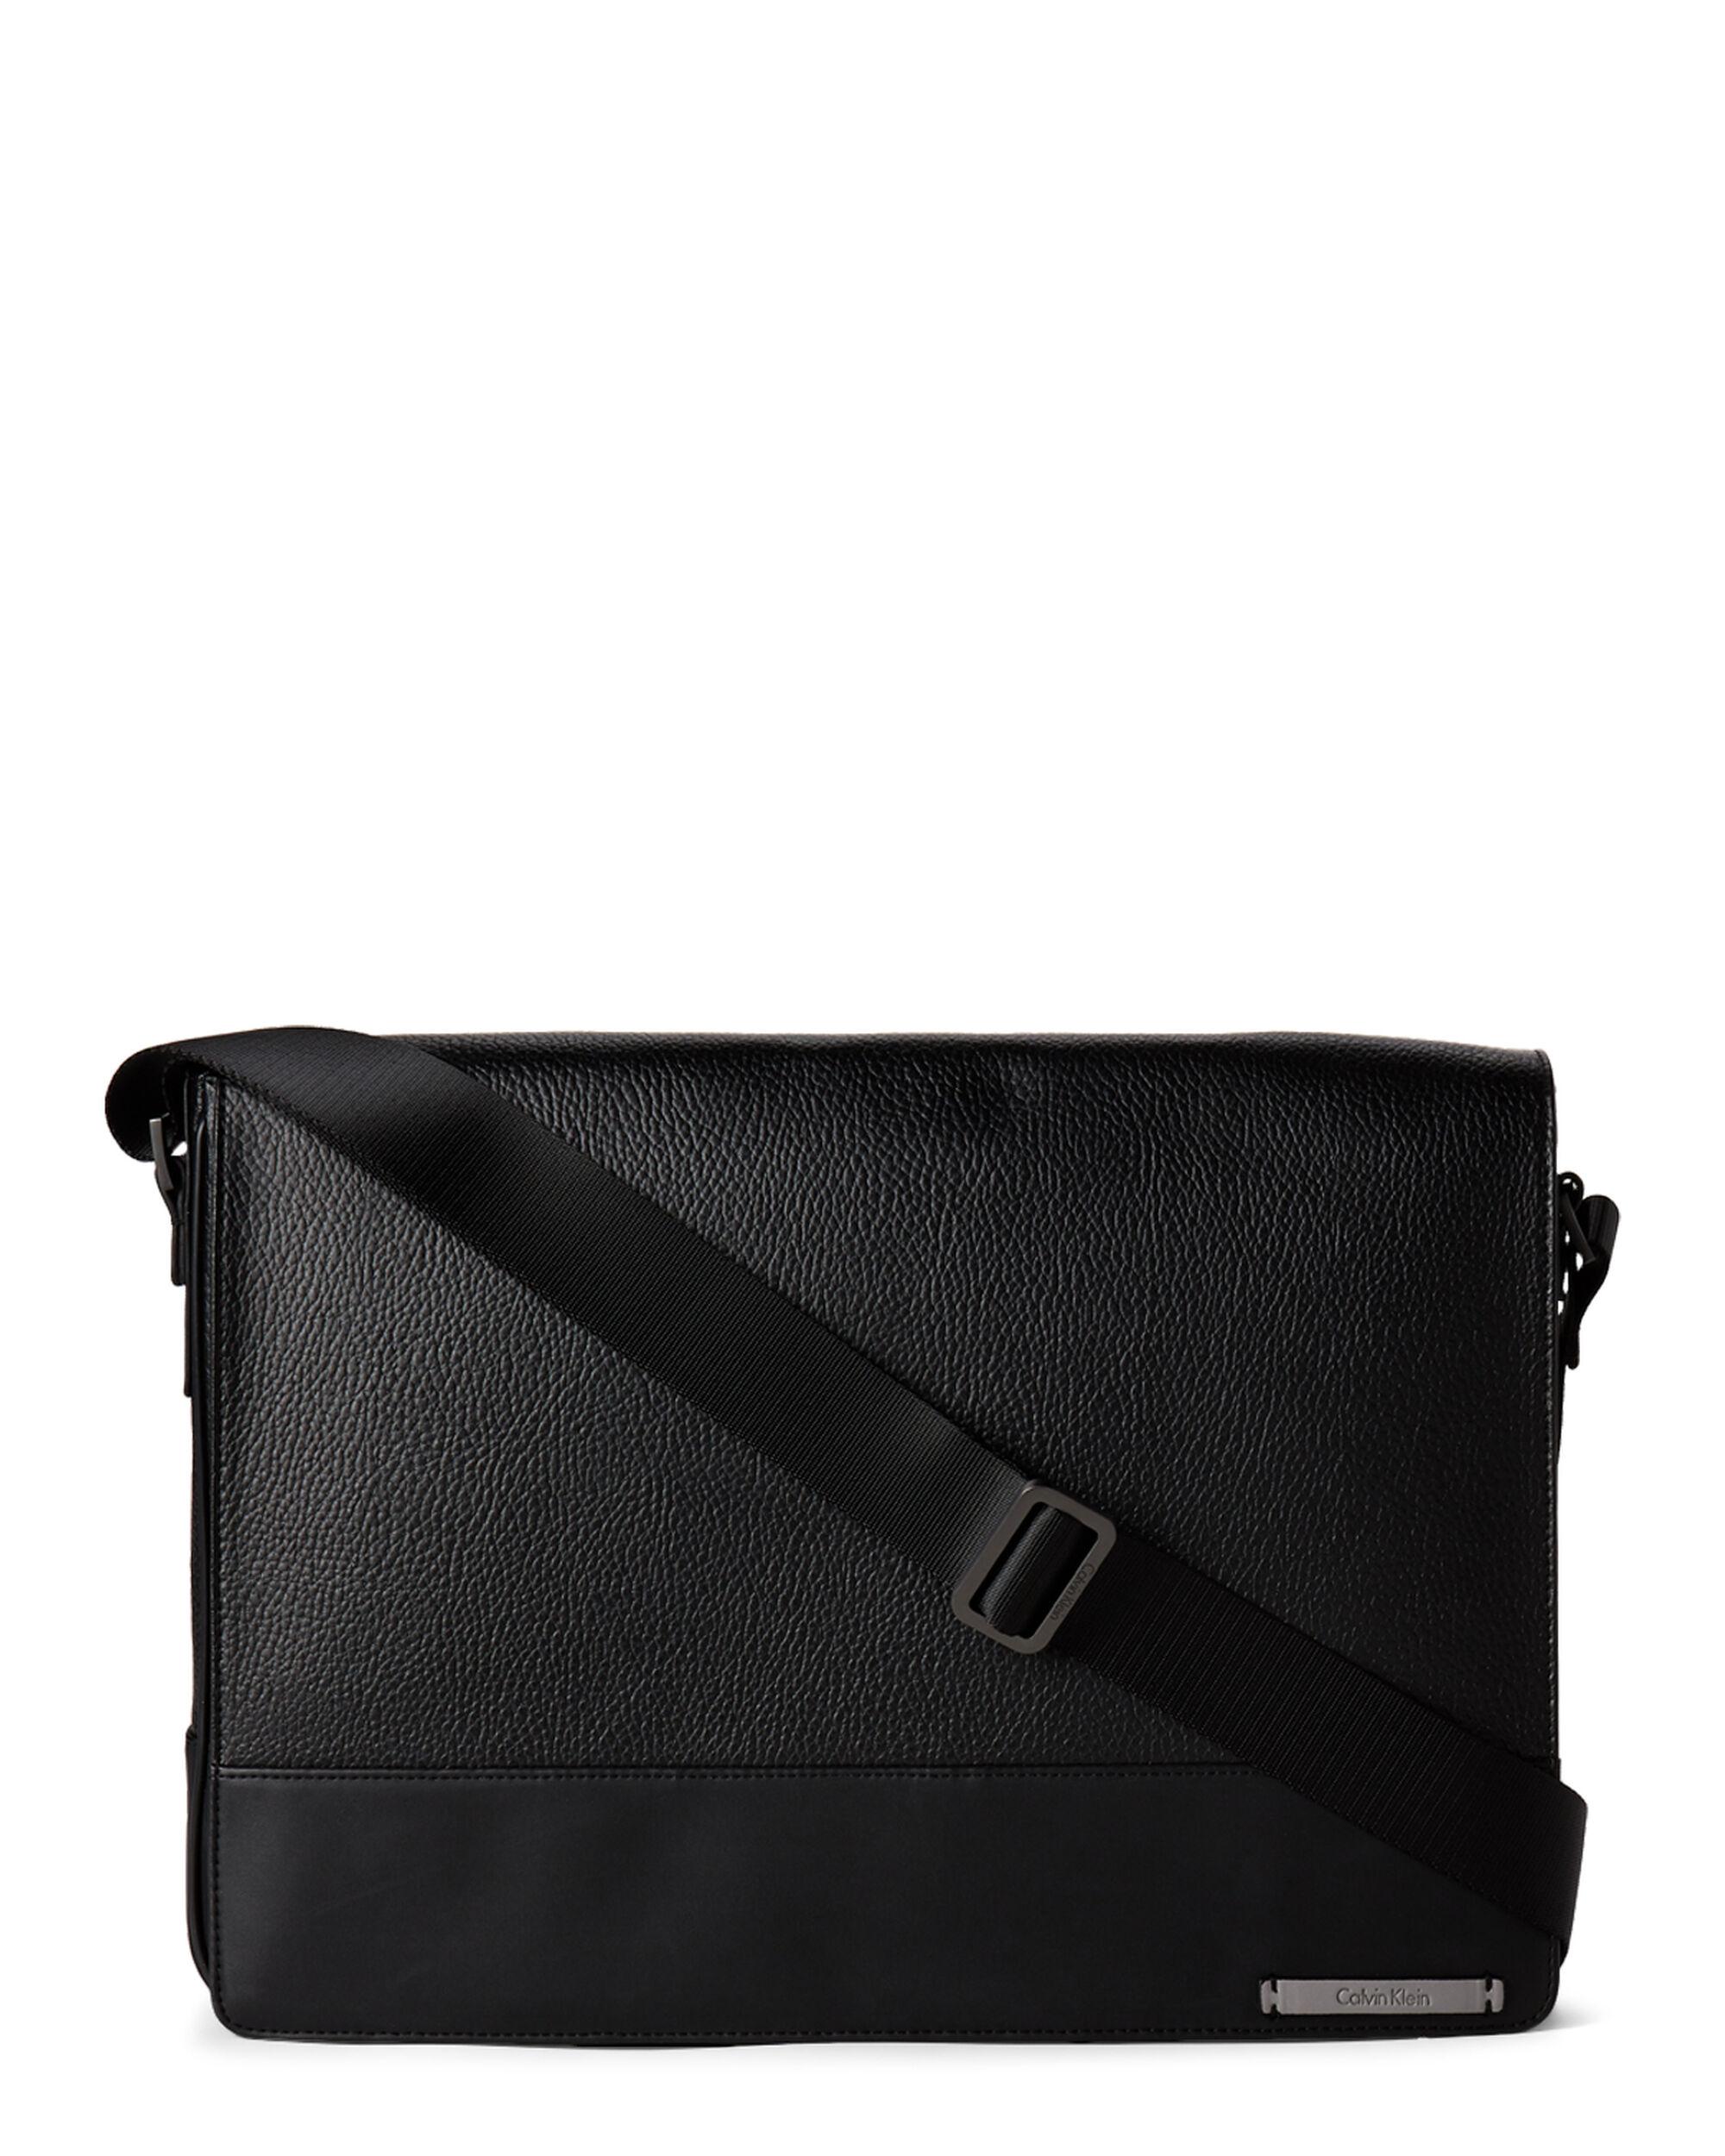 Calvin Klein Leather Laptop Messenger Bag in Black for Men - Lyst